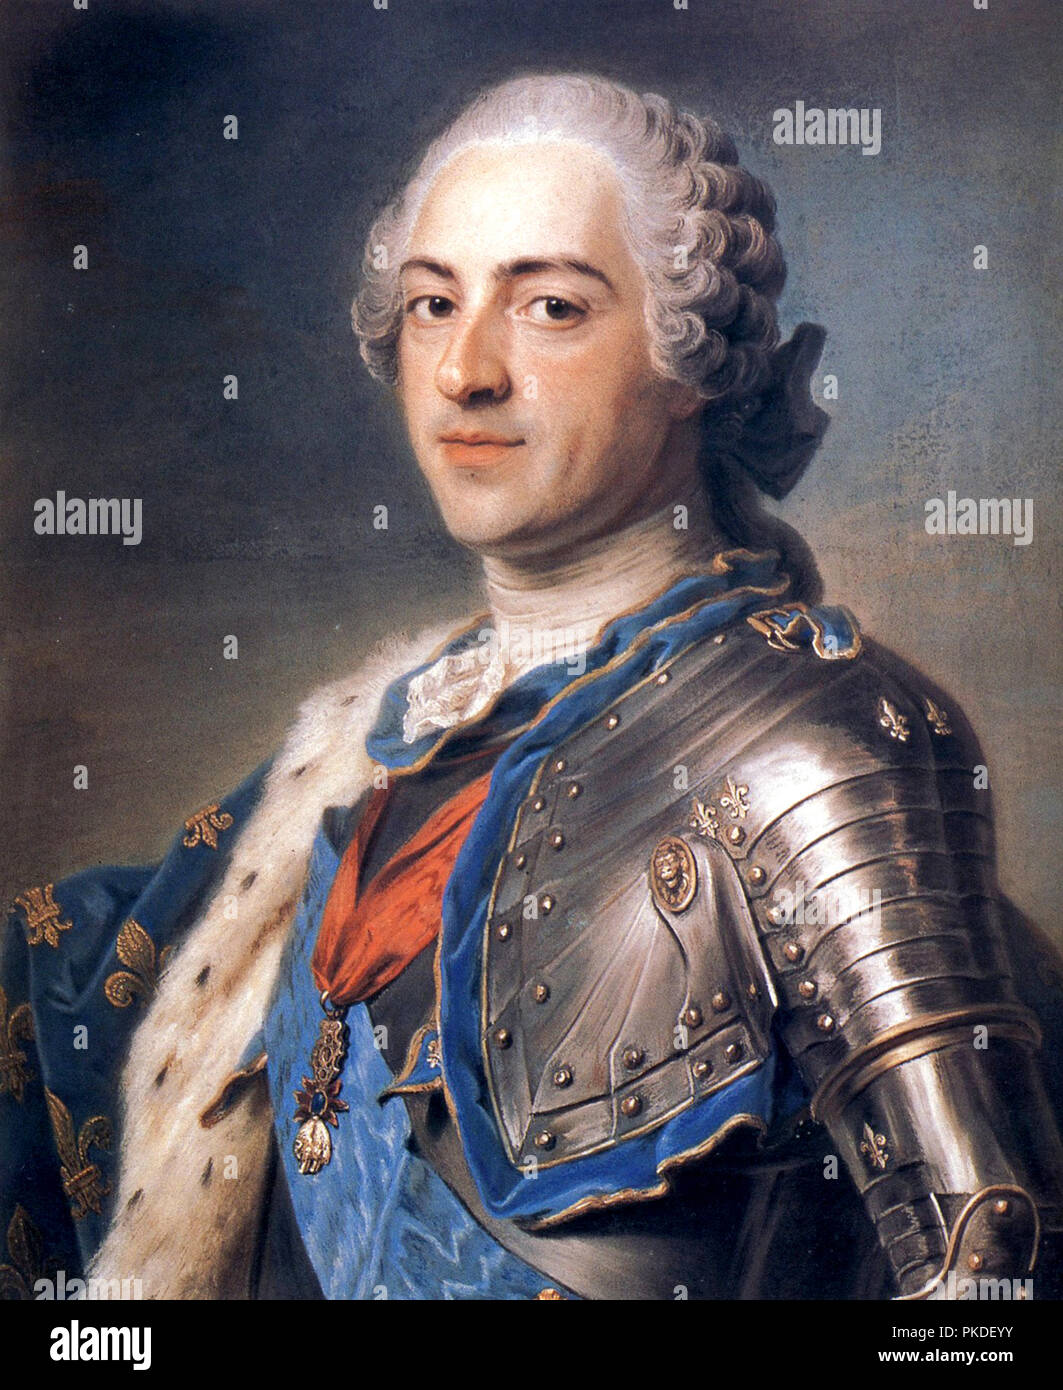 France, Rheims, Portrait of Louis XIII, King of France